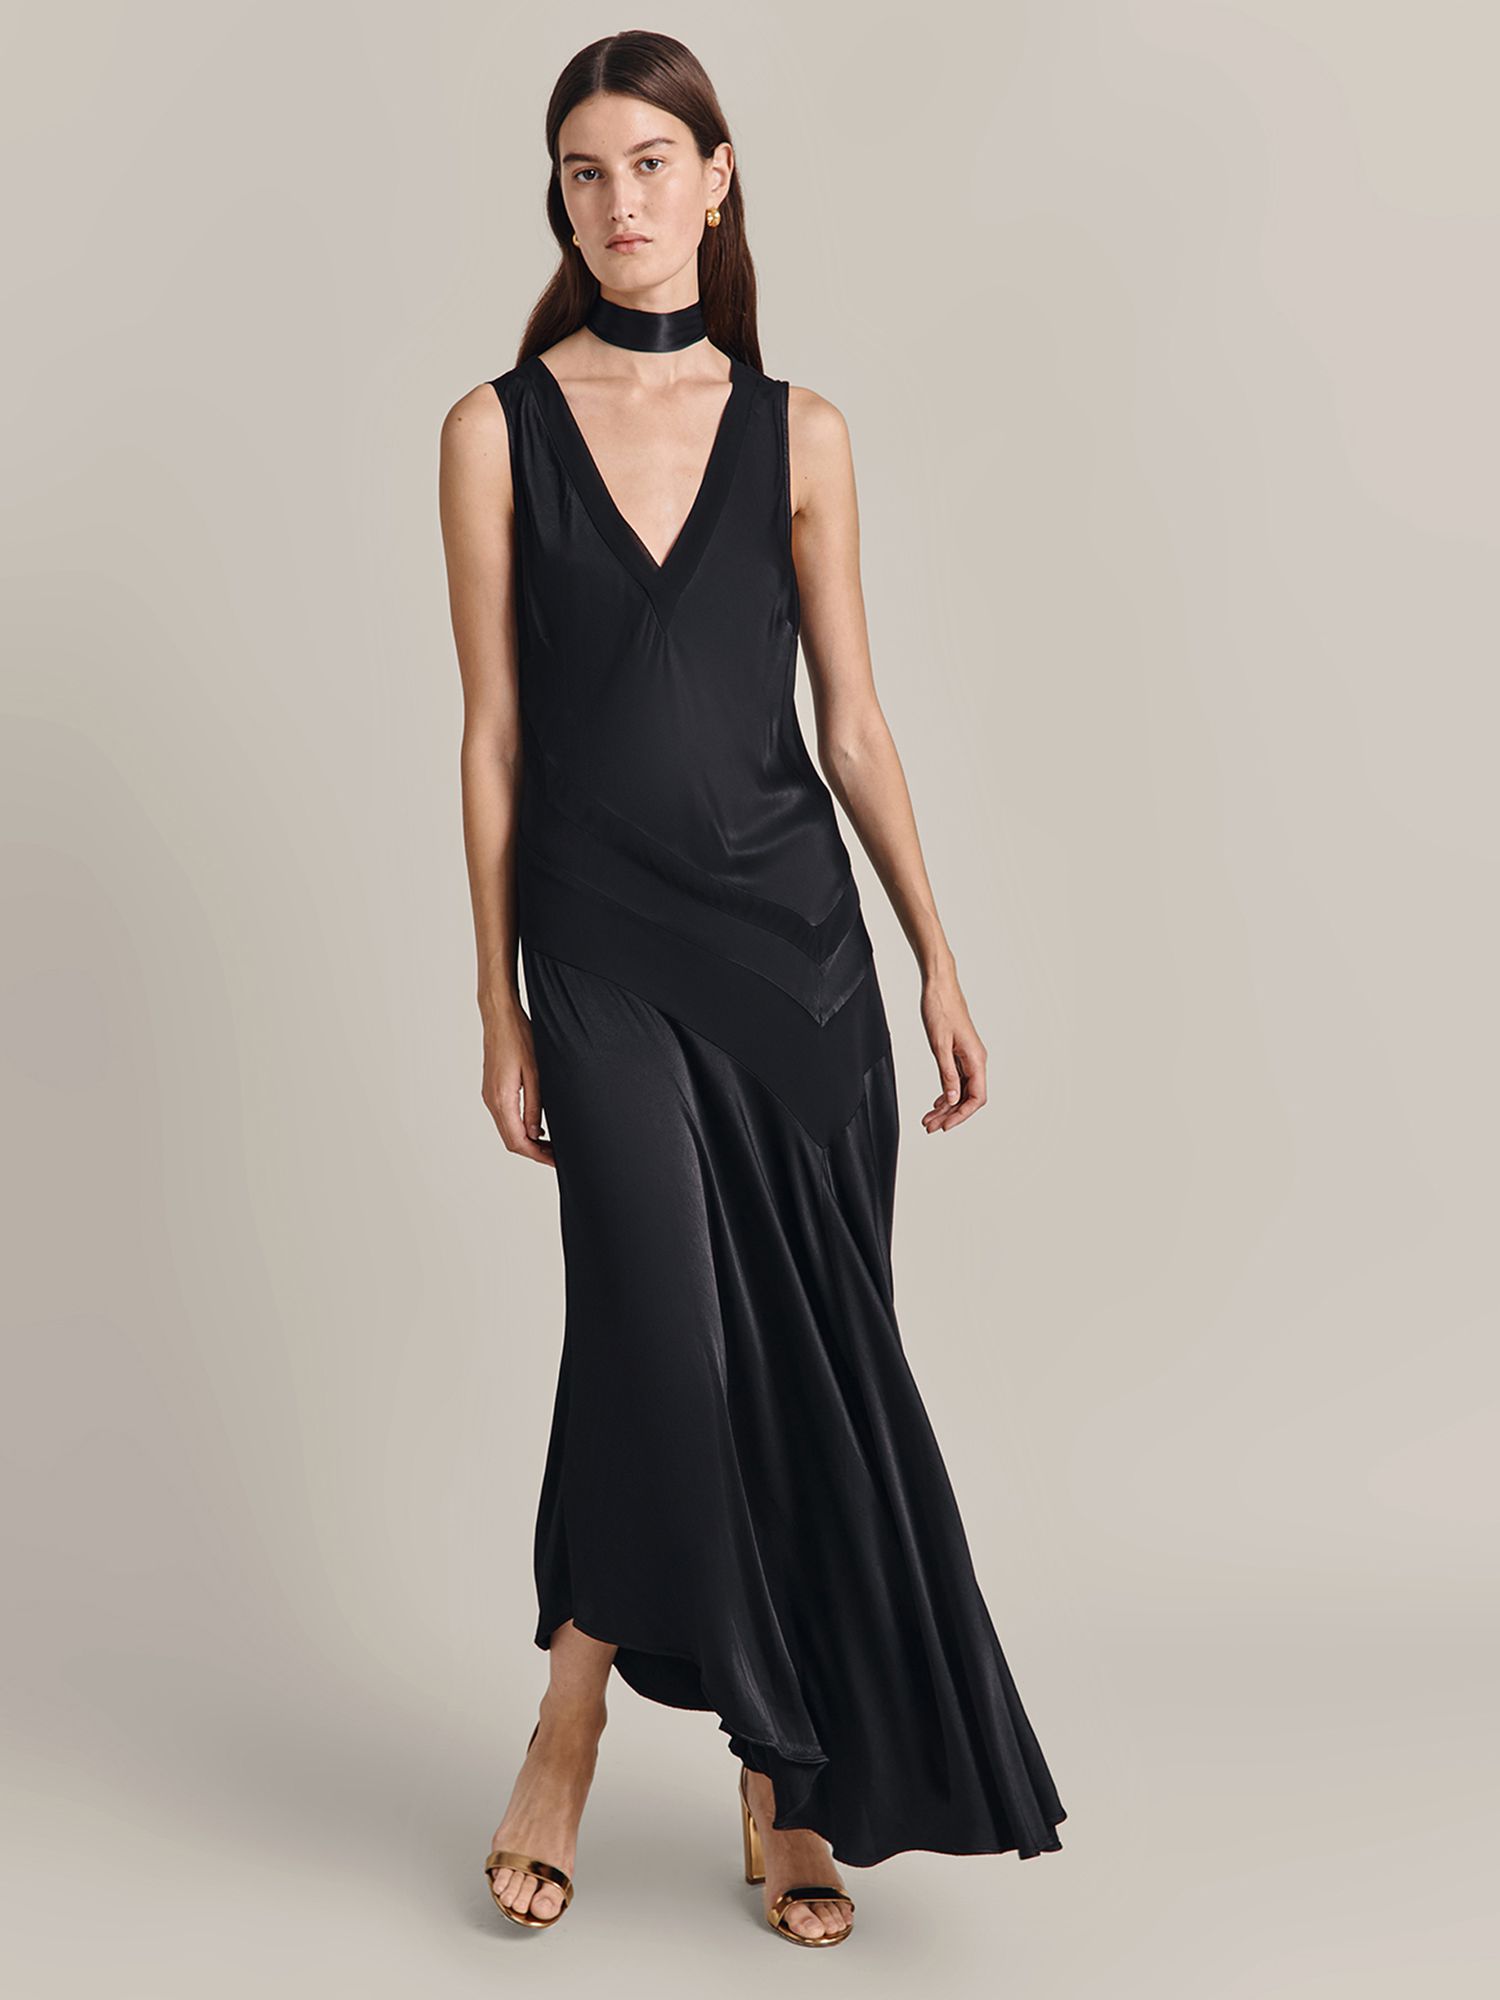 Ghost Addison Maxi Dress, Black at John Lewis & Partners